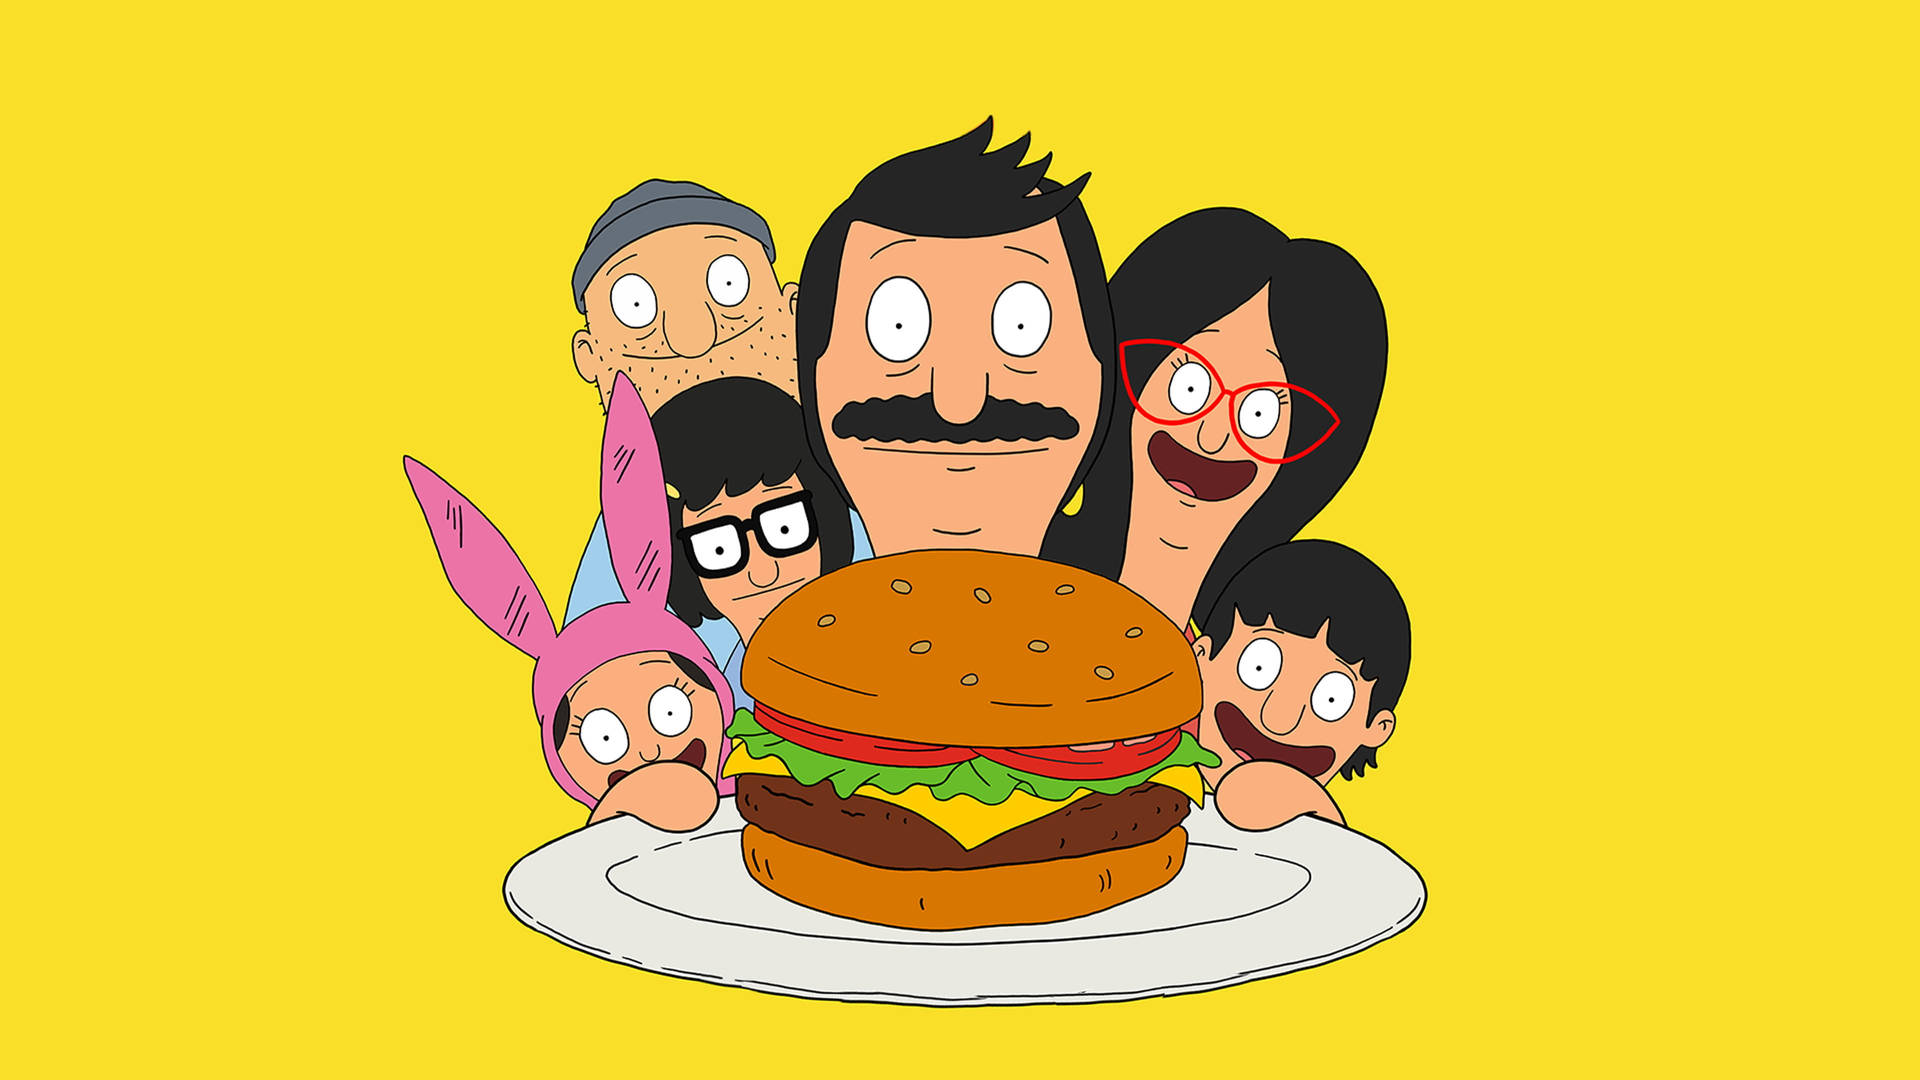 Digi-Art Of A Family With Cheeseburger Wallpaper